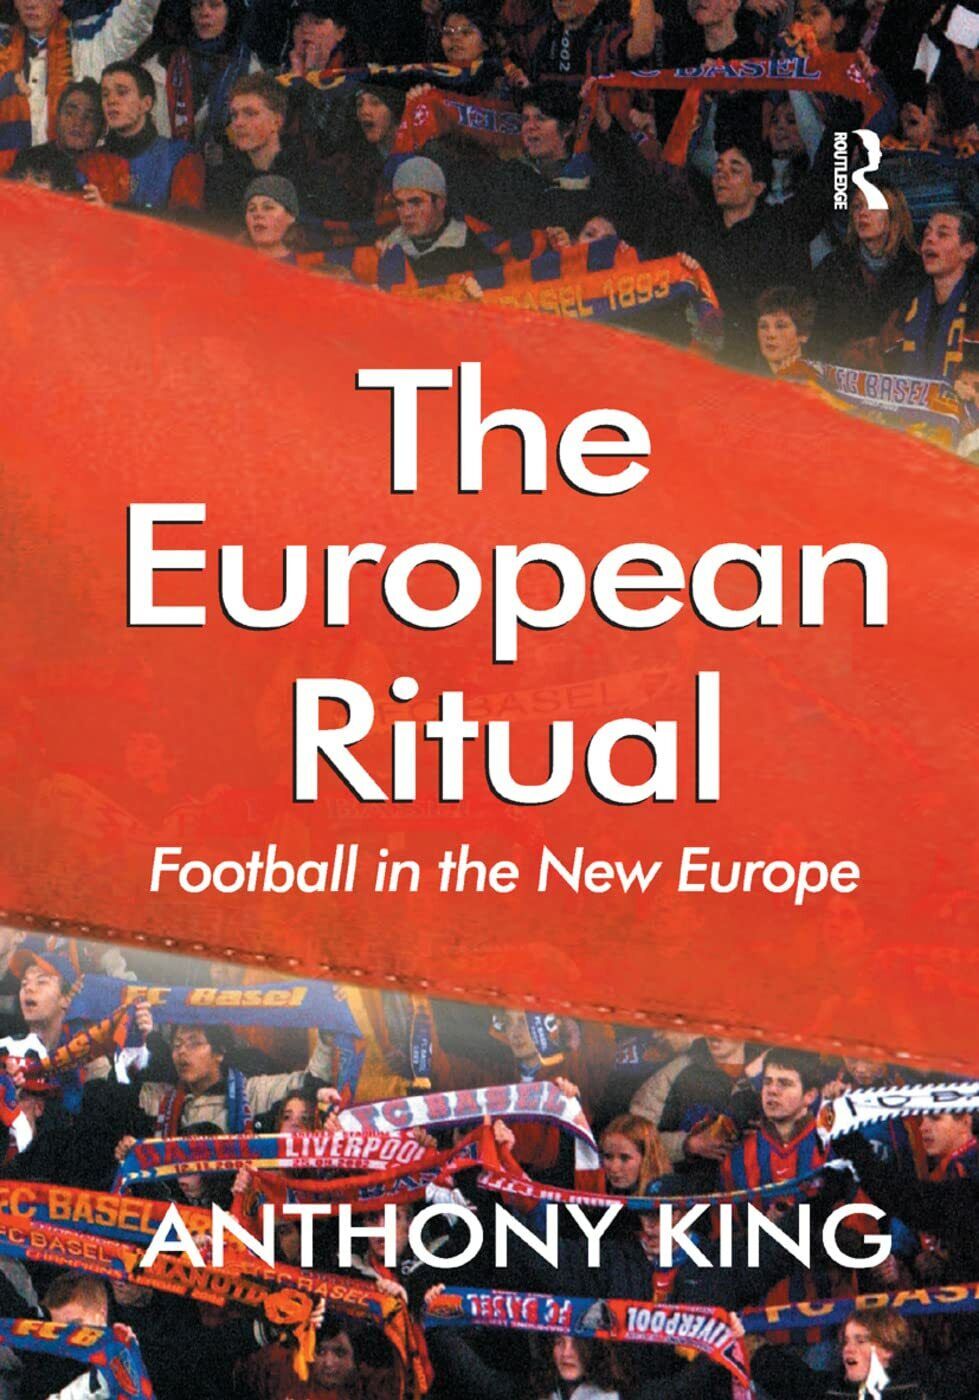 The European Ritual - Anthony King - Routledge, 2019